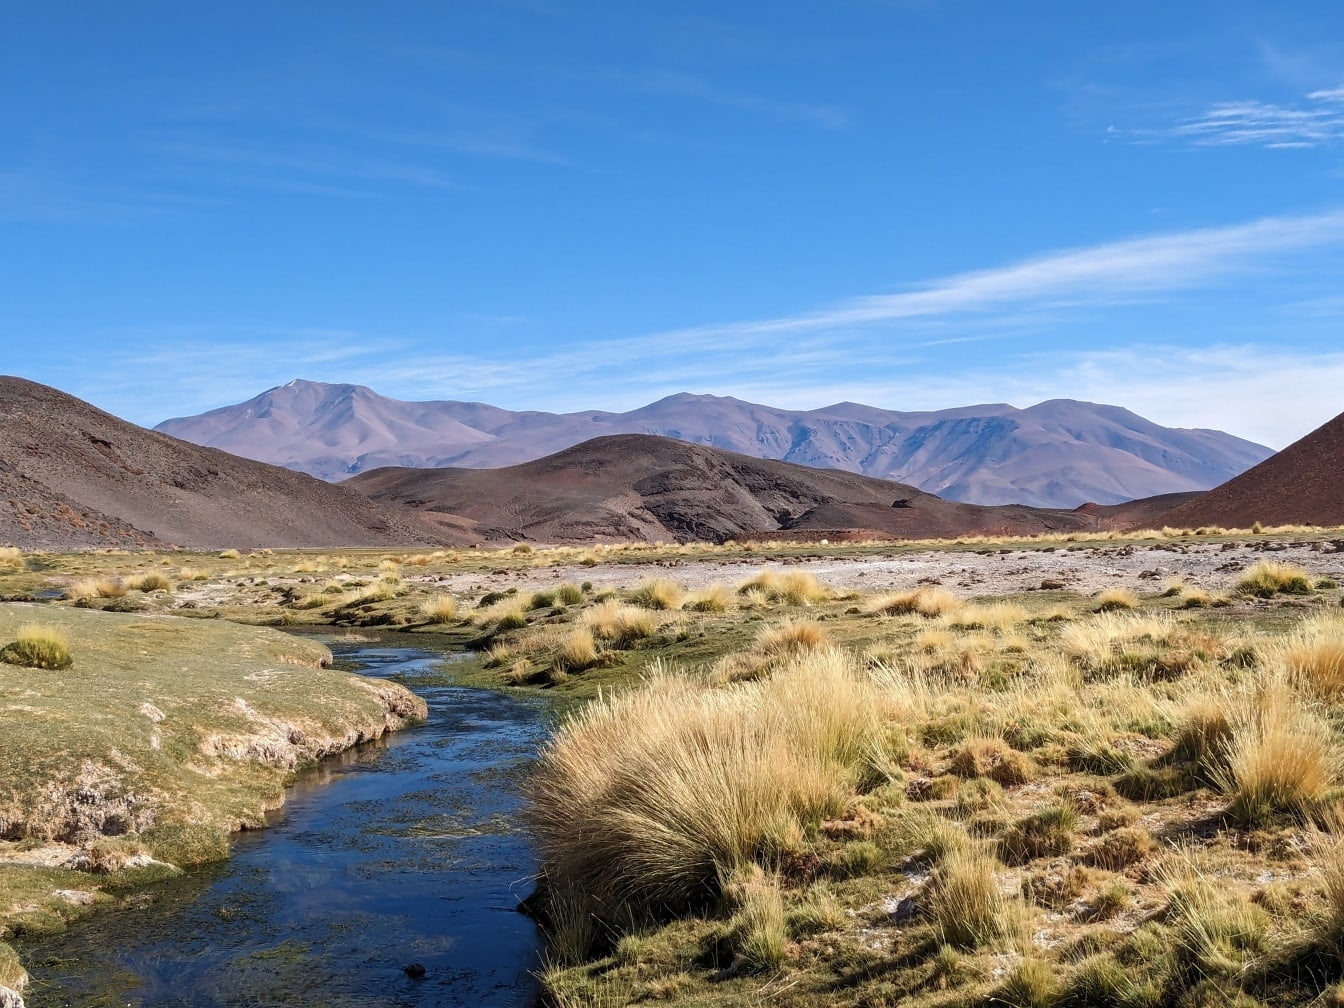 Aliran mengalir melalui padang pasir di dataran tinggi gersang di Puna de Atacama di pegunungan Andes